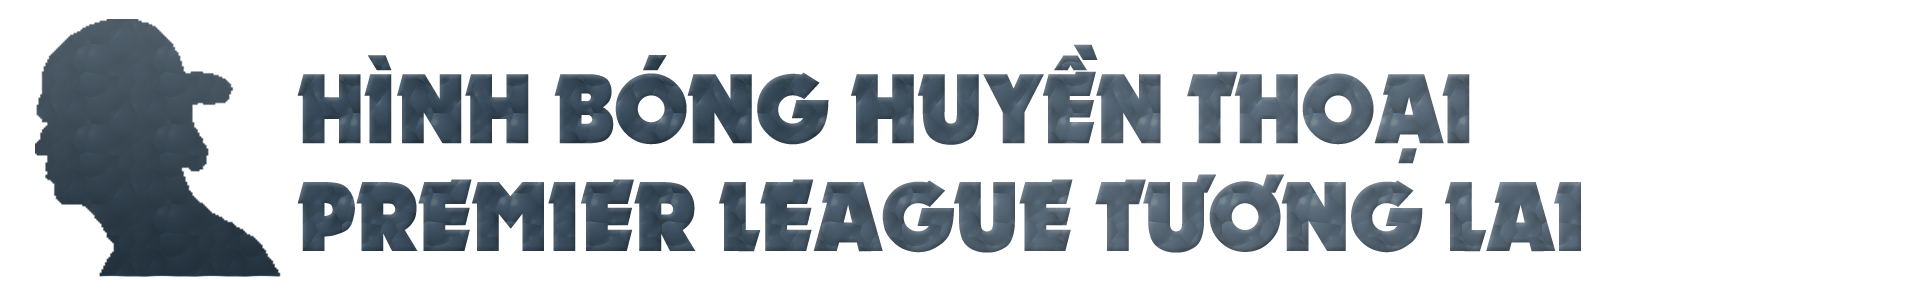 Haaland tỏa sáng: Chân dung huyền thoại tương lai của Premier League - 14